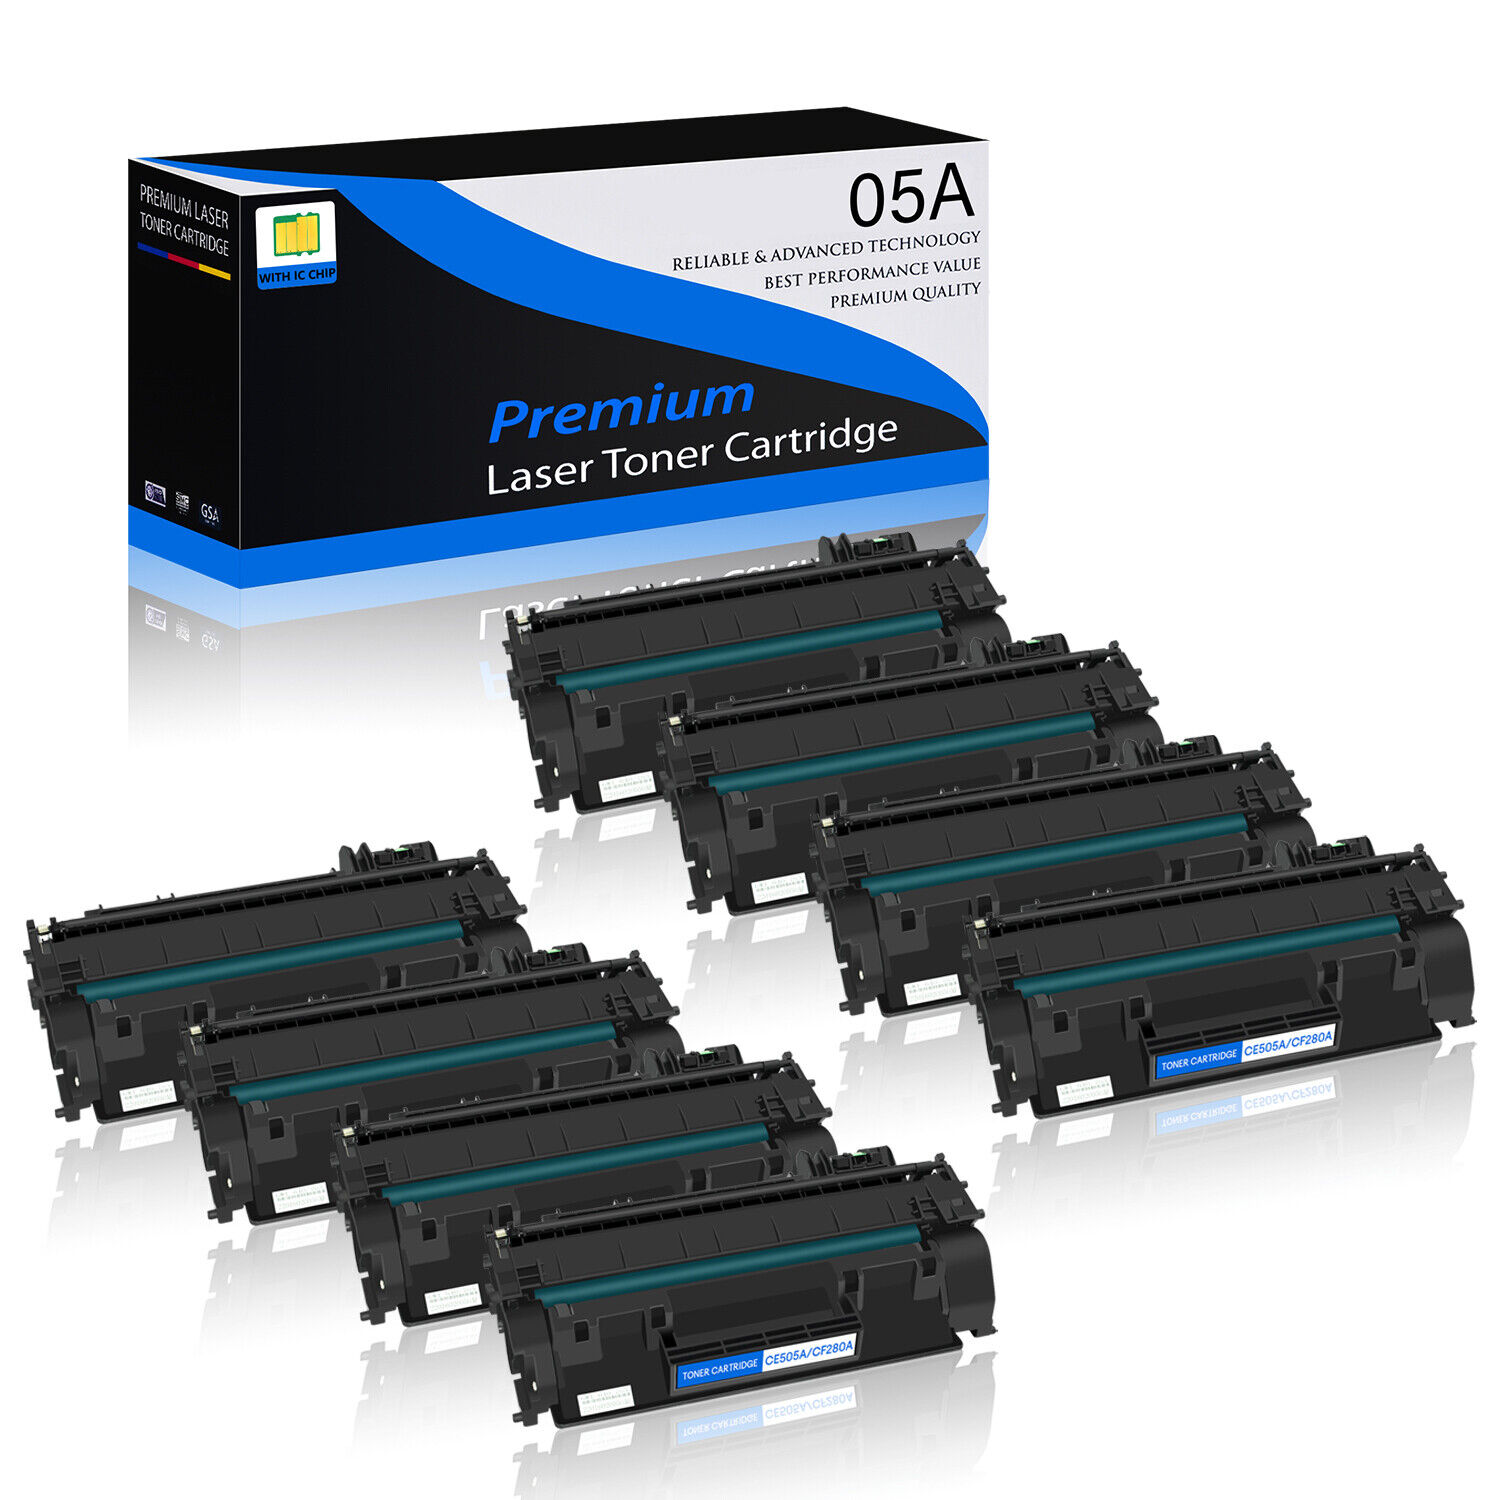 8PK CE505A 05A Black Toner Cartridge for HP LaserJet P2050 P2055 P2055d P2035n